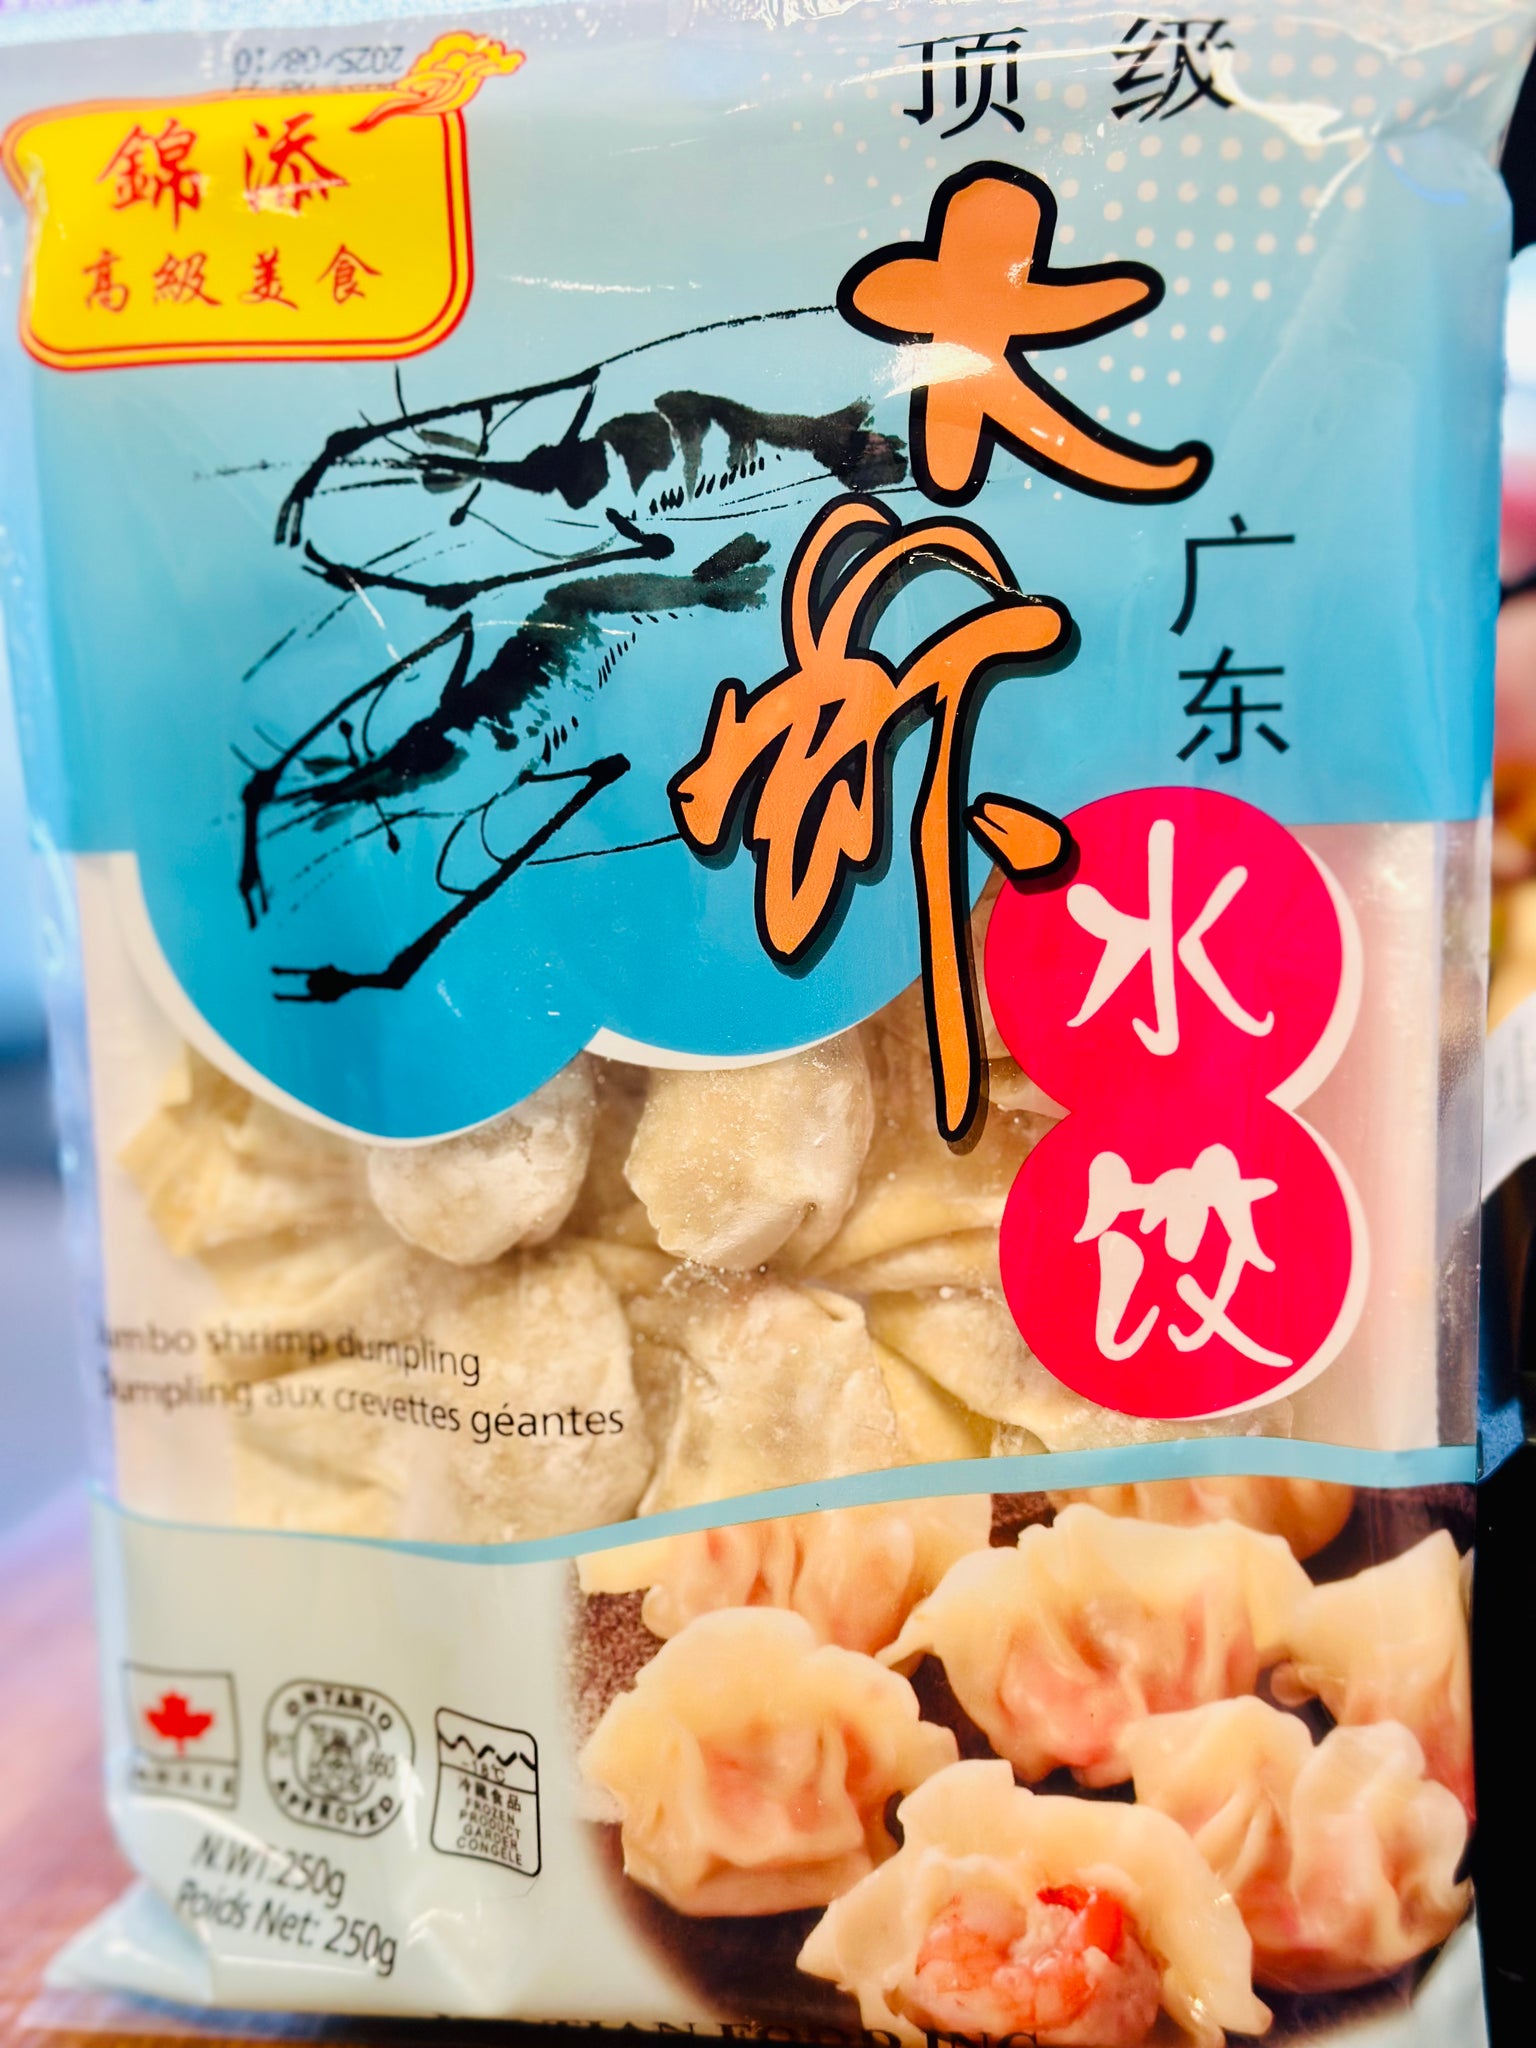 锦添大虾广东水饺 jumbo shrimp dumplings